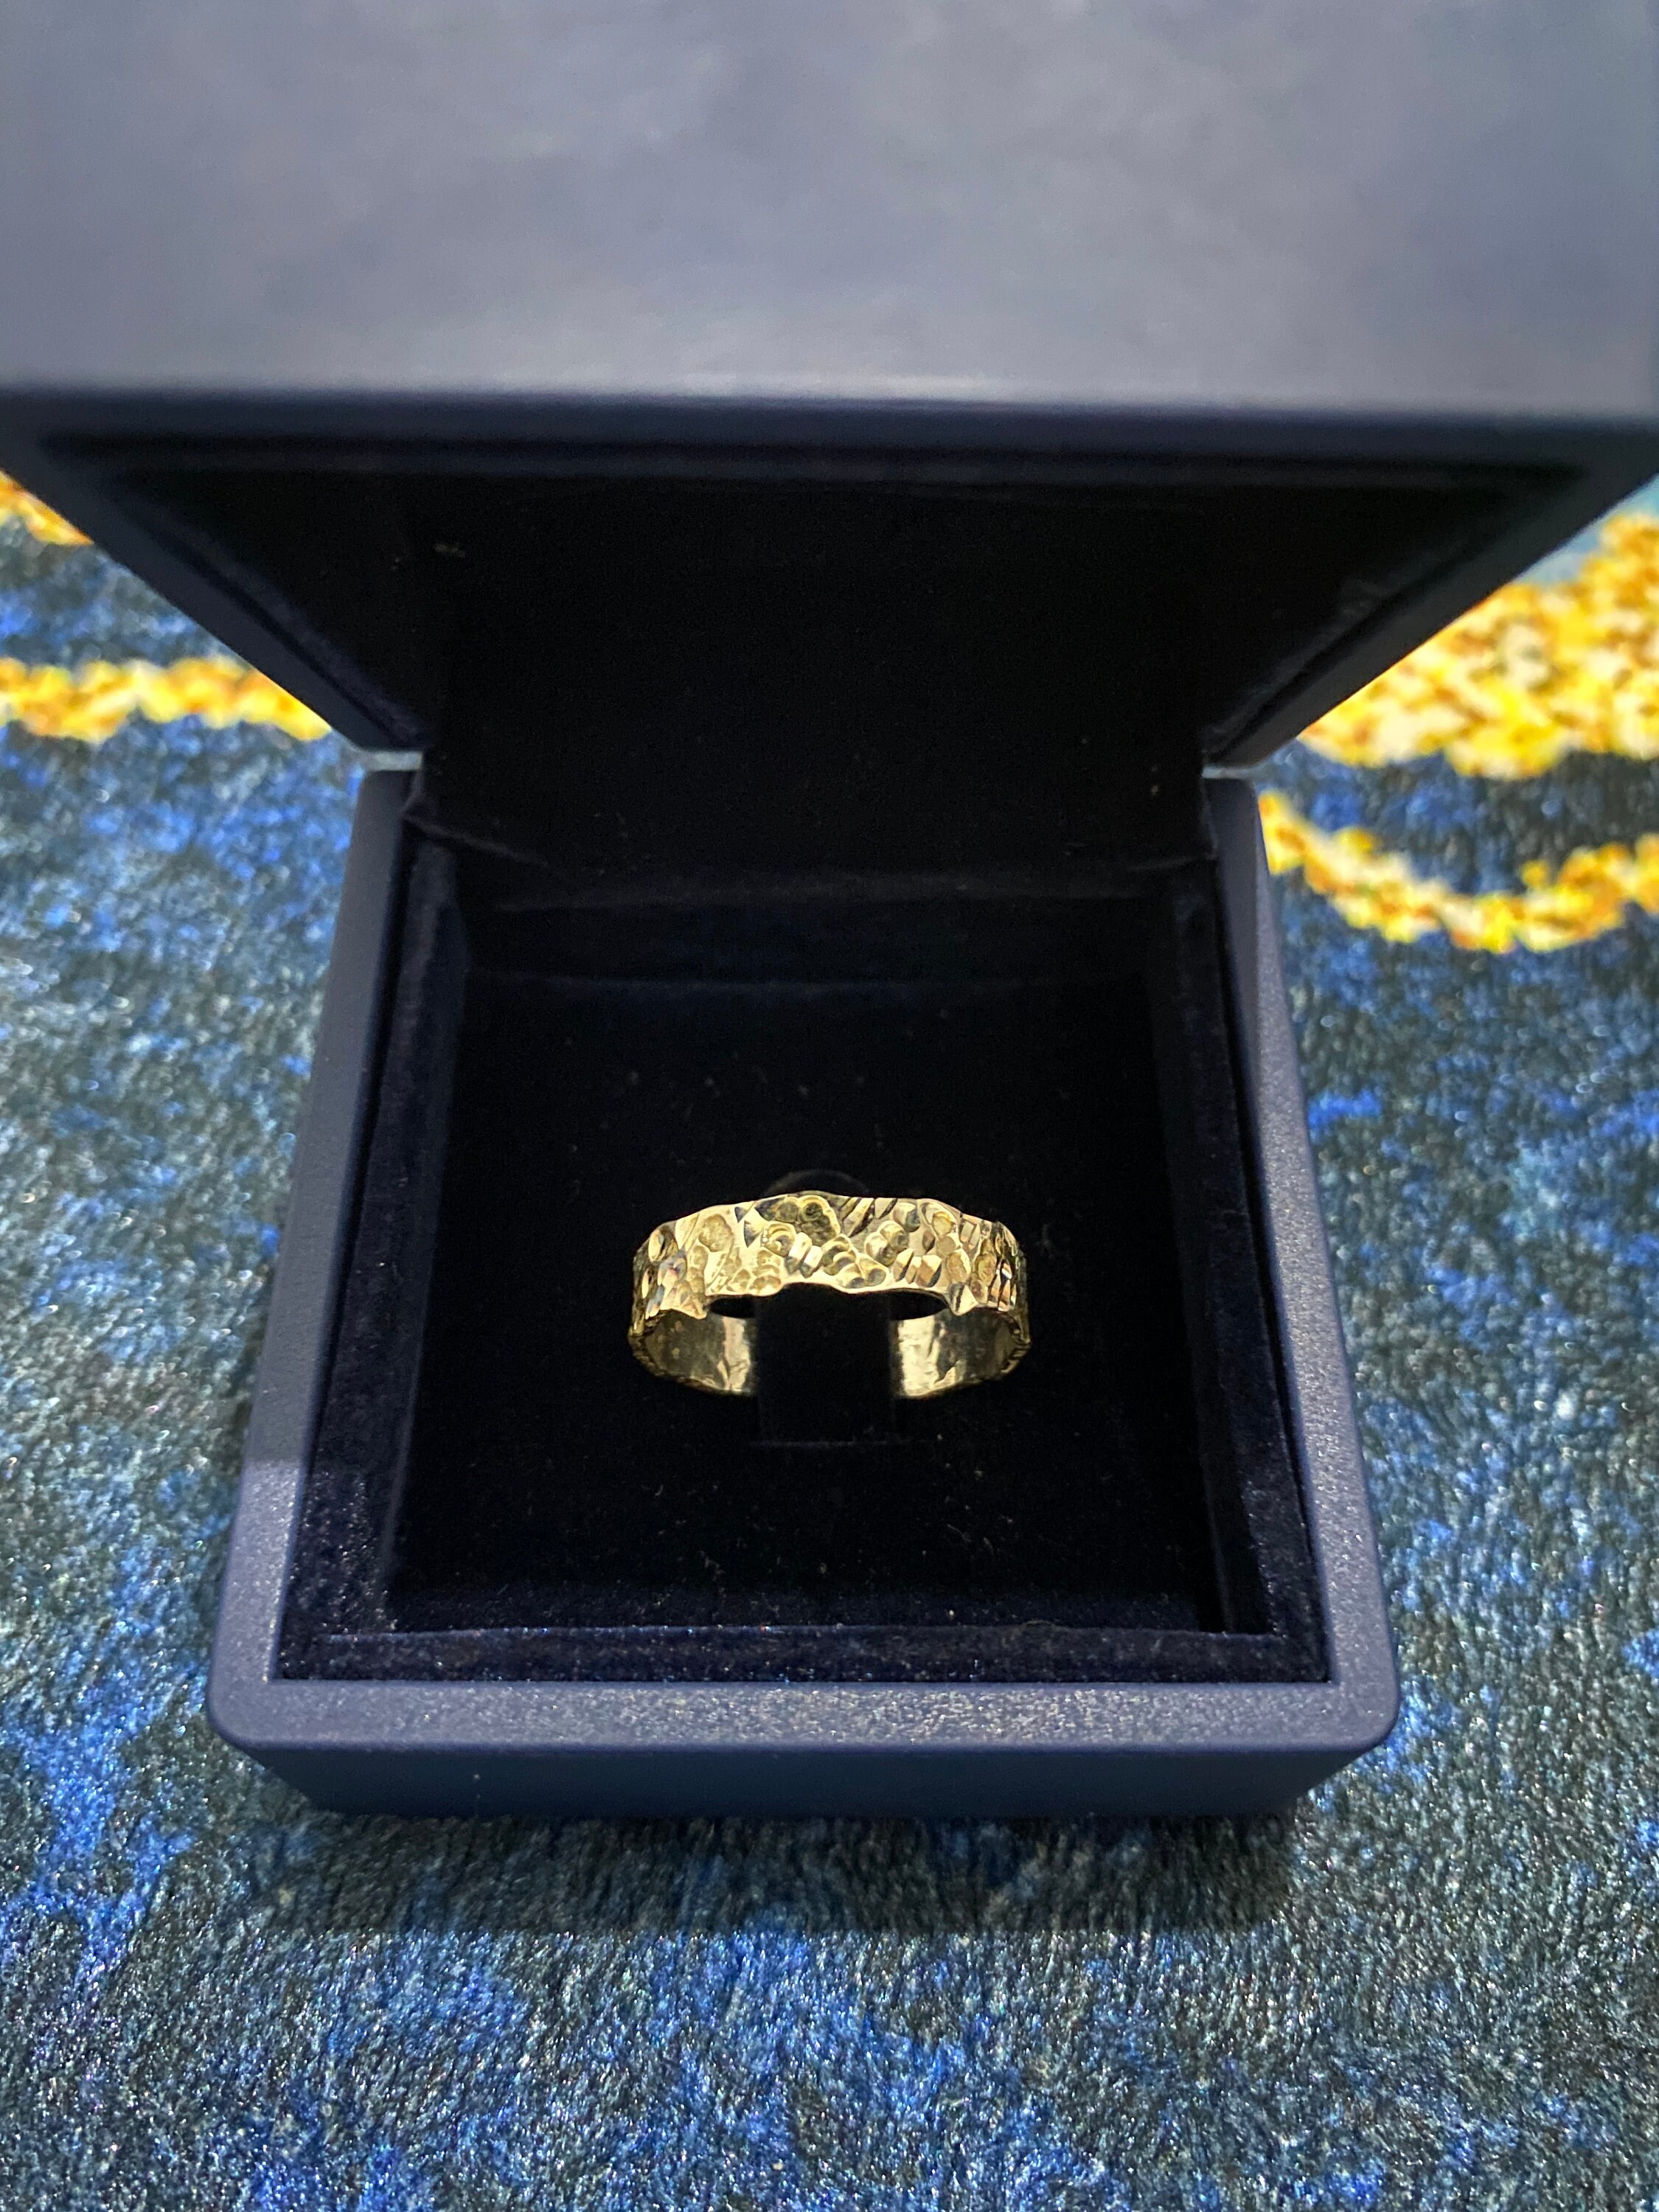 The Ibis Fancy Gold Ring For Men (Arowana) 916 – Welcome to Rani Alankar